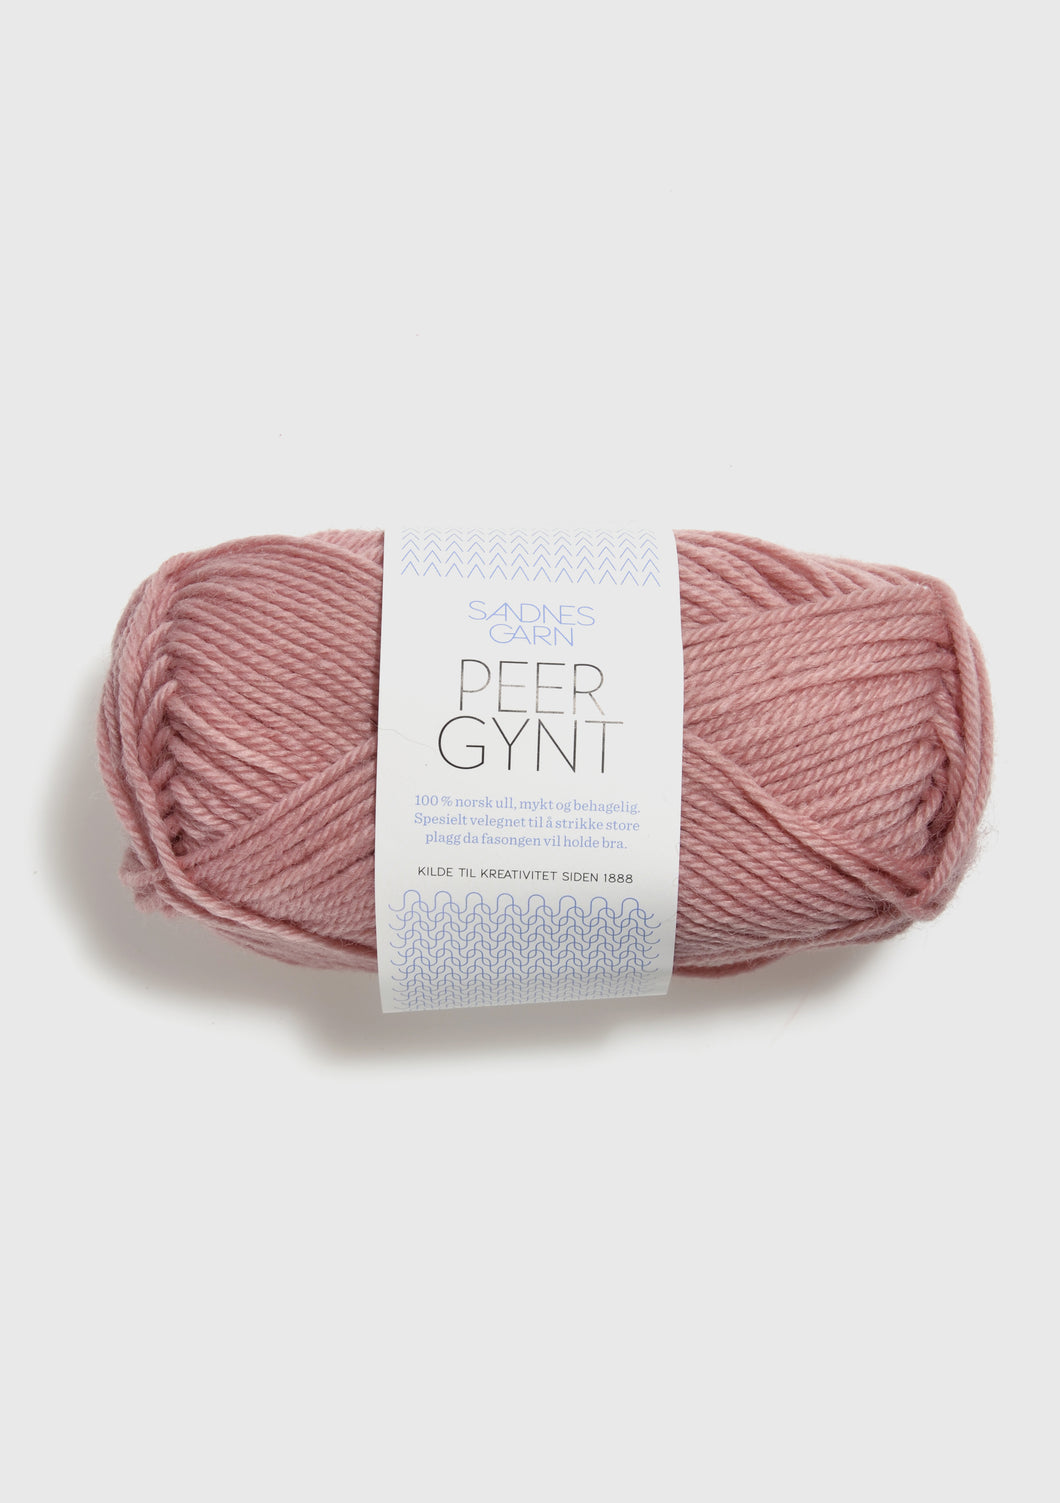 Sandnes Peer Gynt  - Old Pink 4023